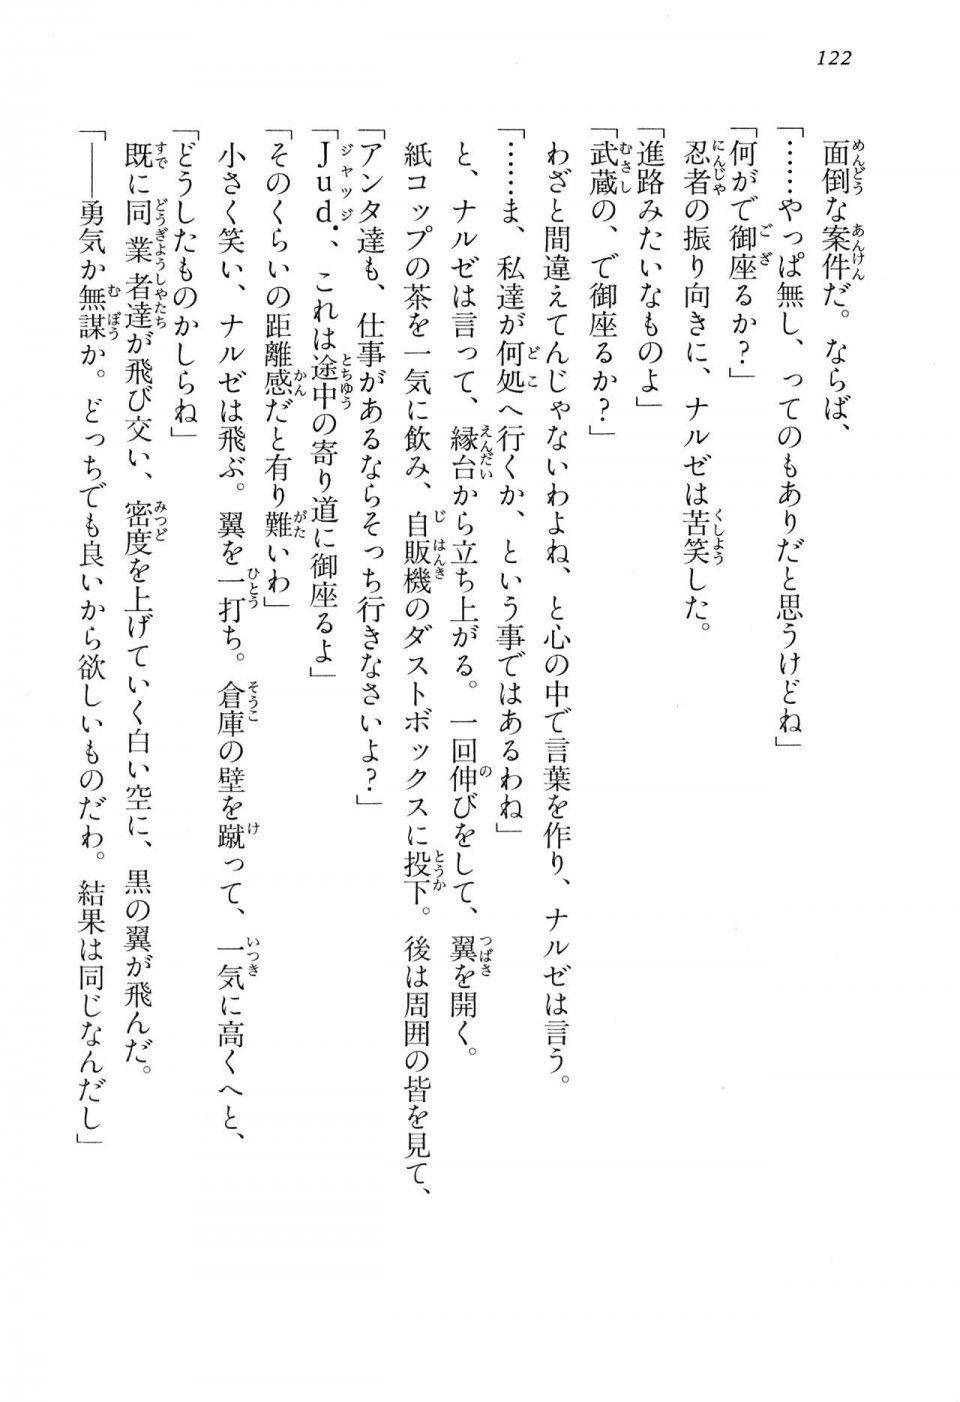 Kyoukai Senjou no Horizon BD Special Mininovel Vol 2(1B) - Photo #126